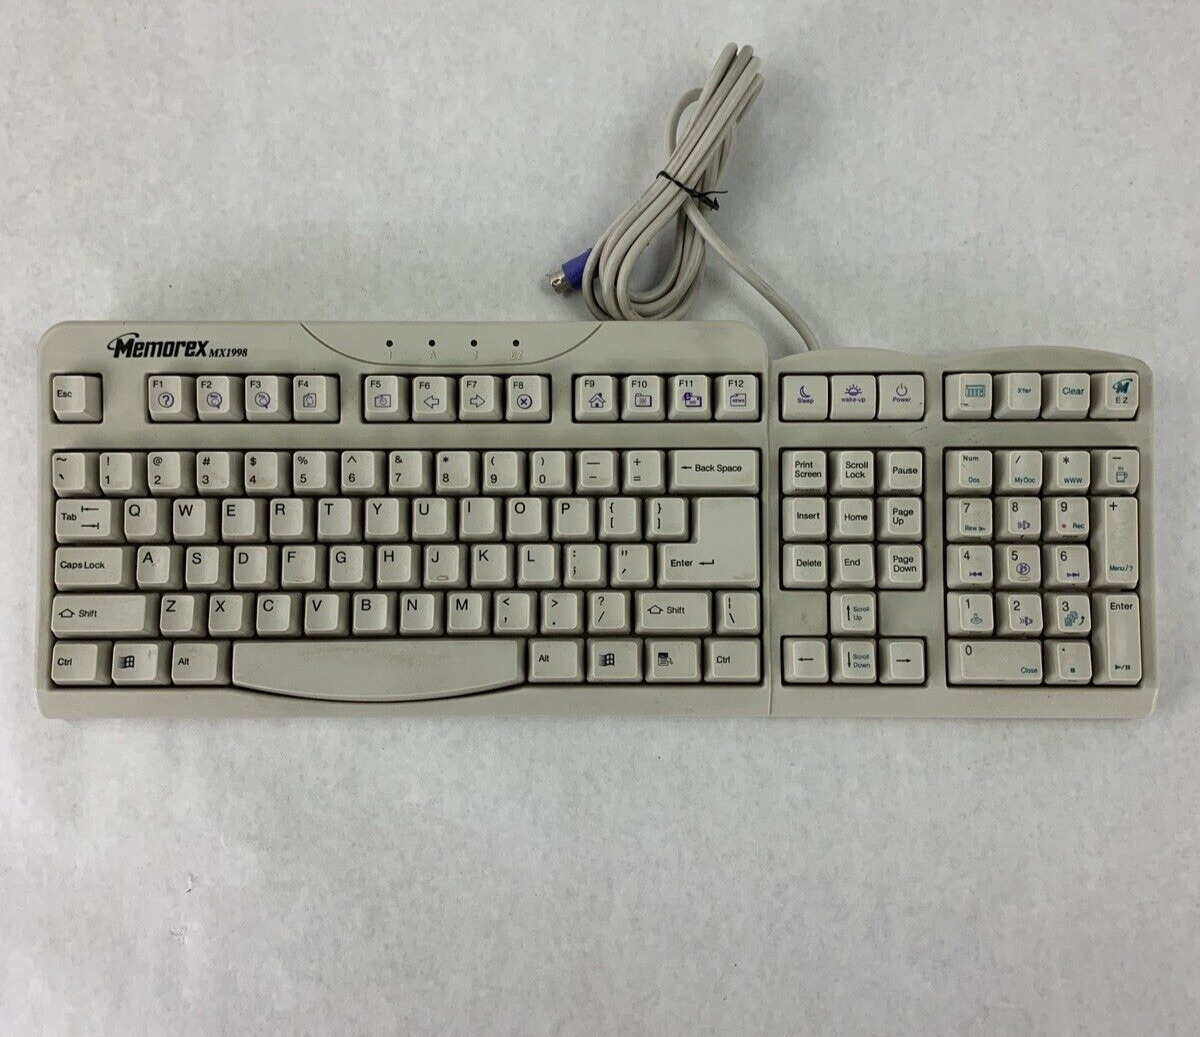 Memorex Internet Multimedia Keyboard MX 1998 Tested